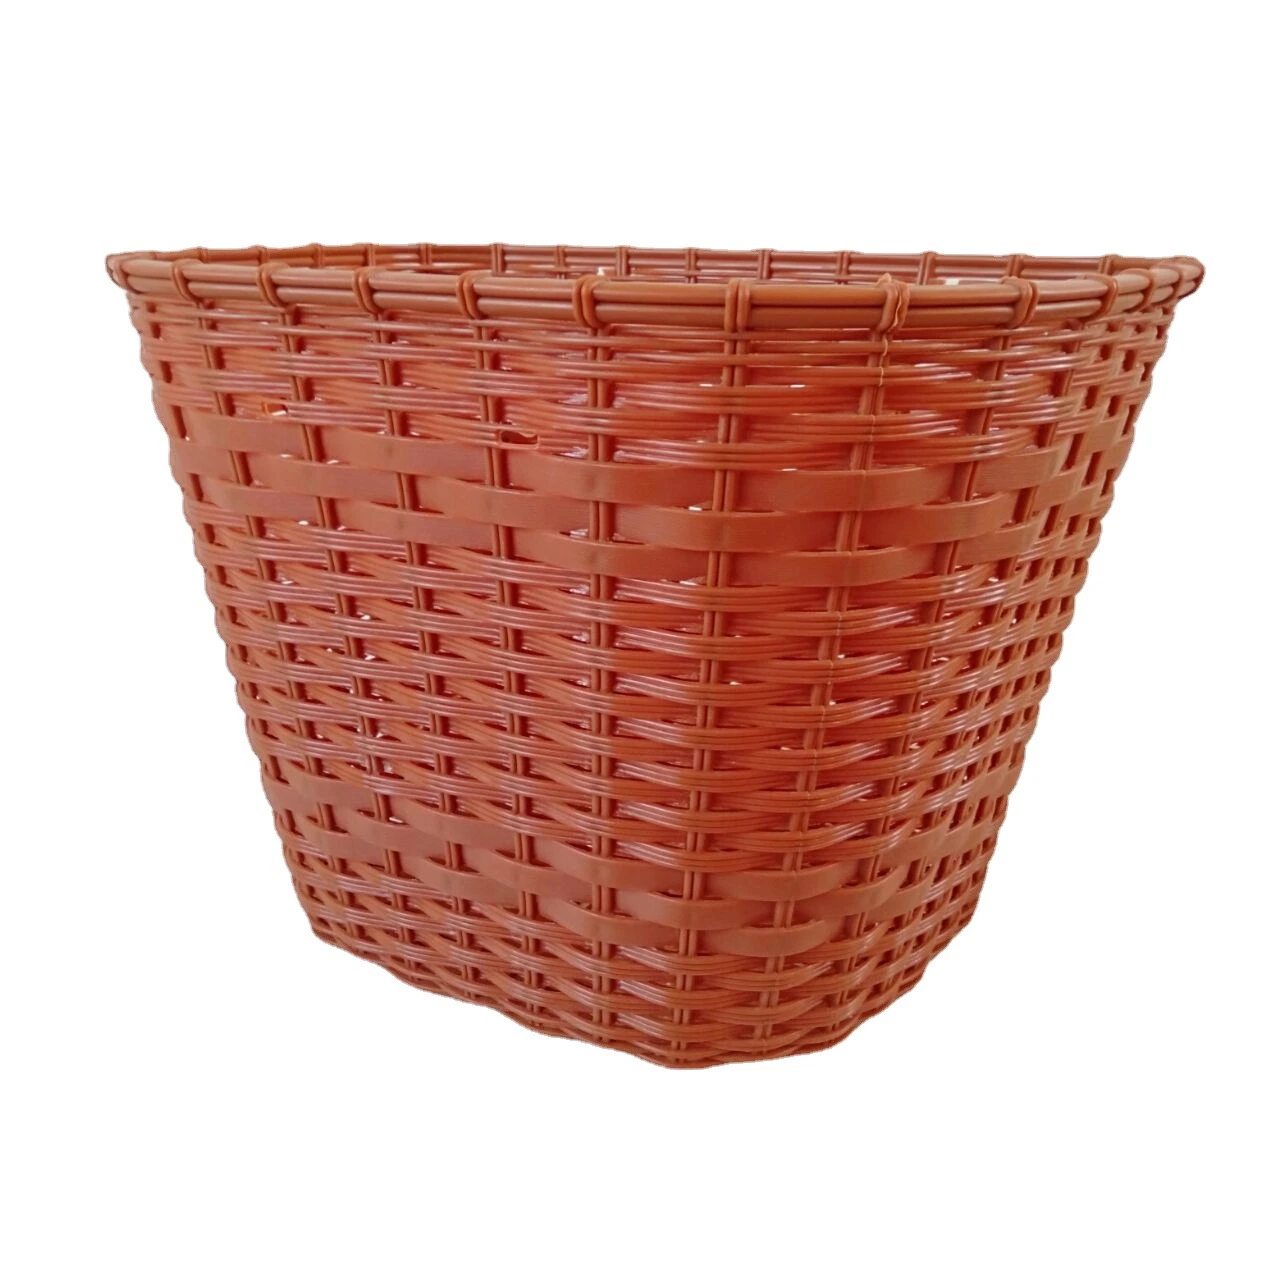 Bicycle Basket Plastic Woven Basket Electric Car Basket